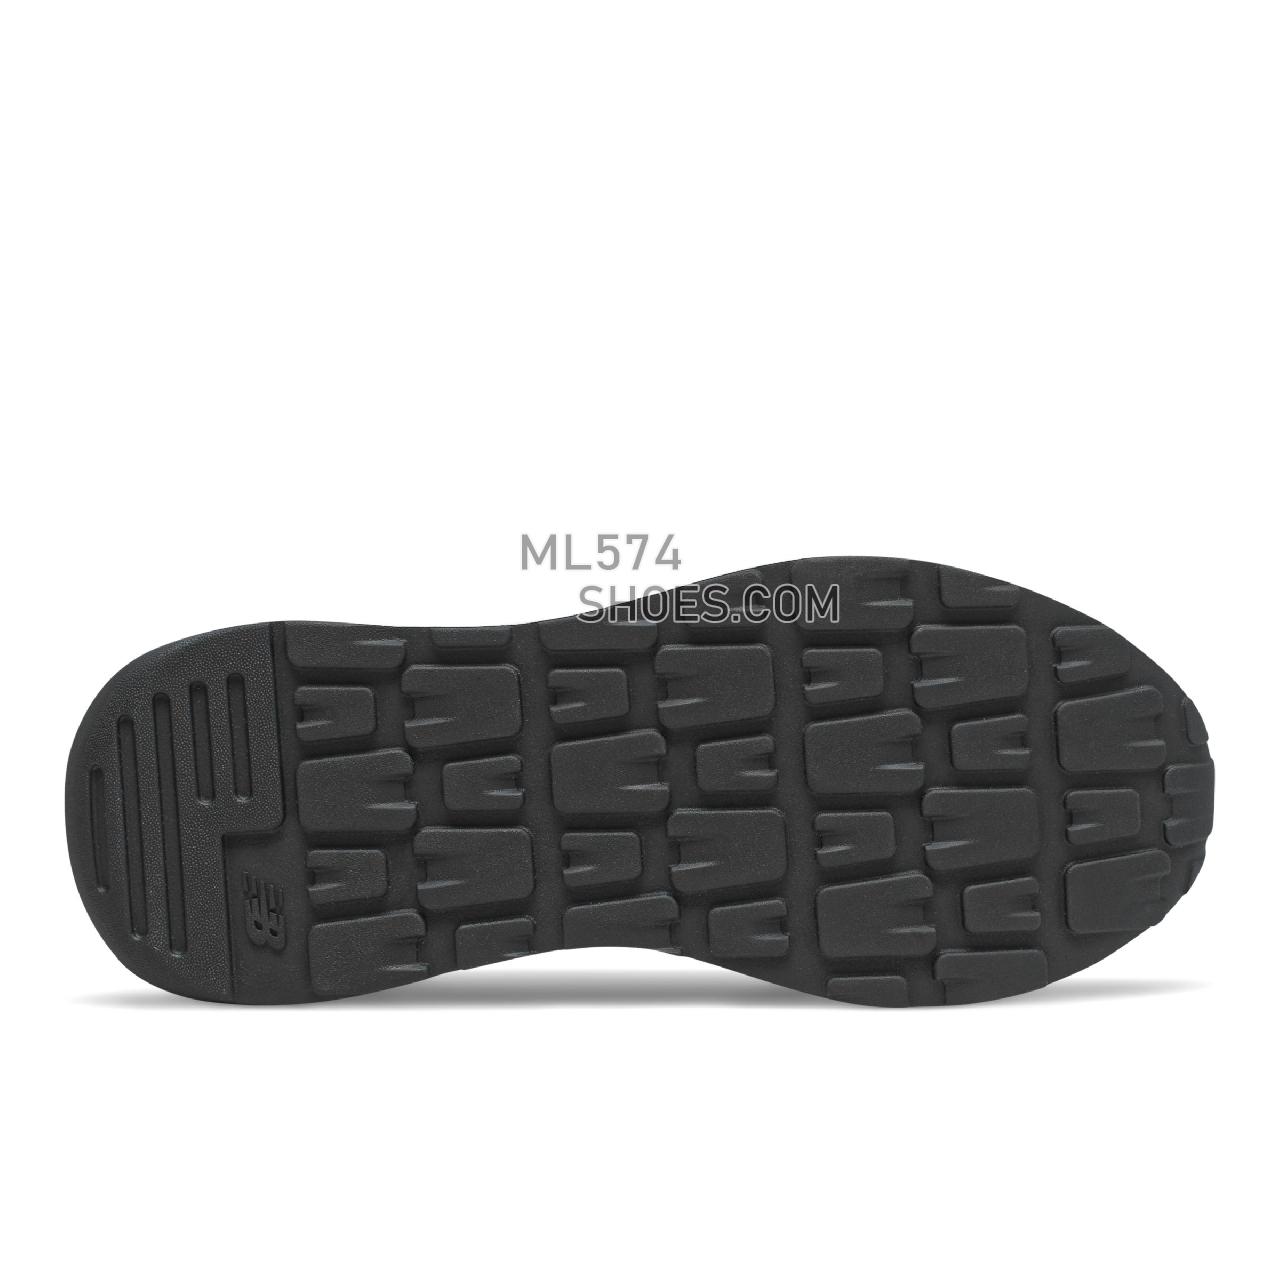 New Balance 57/40 - Men's Sport Style Sneakers - Black - M5740LL